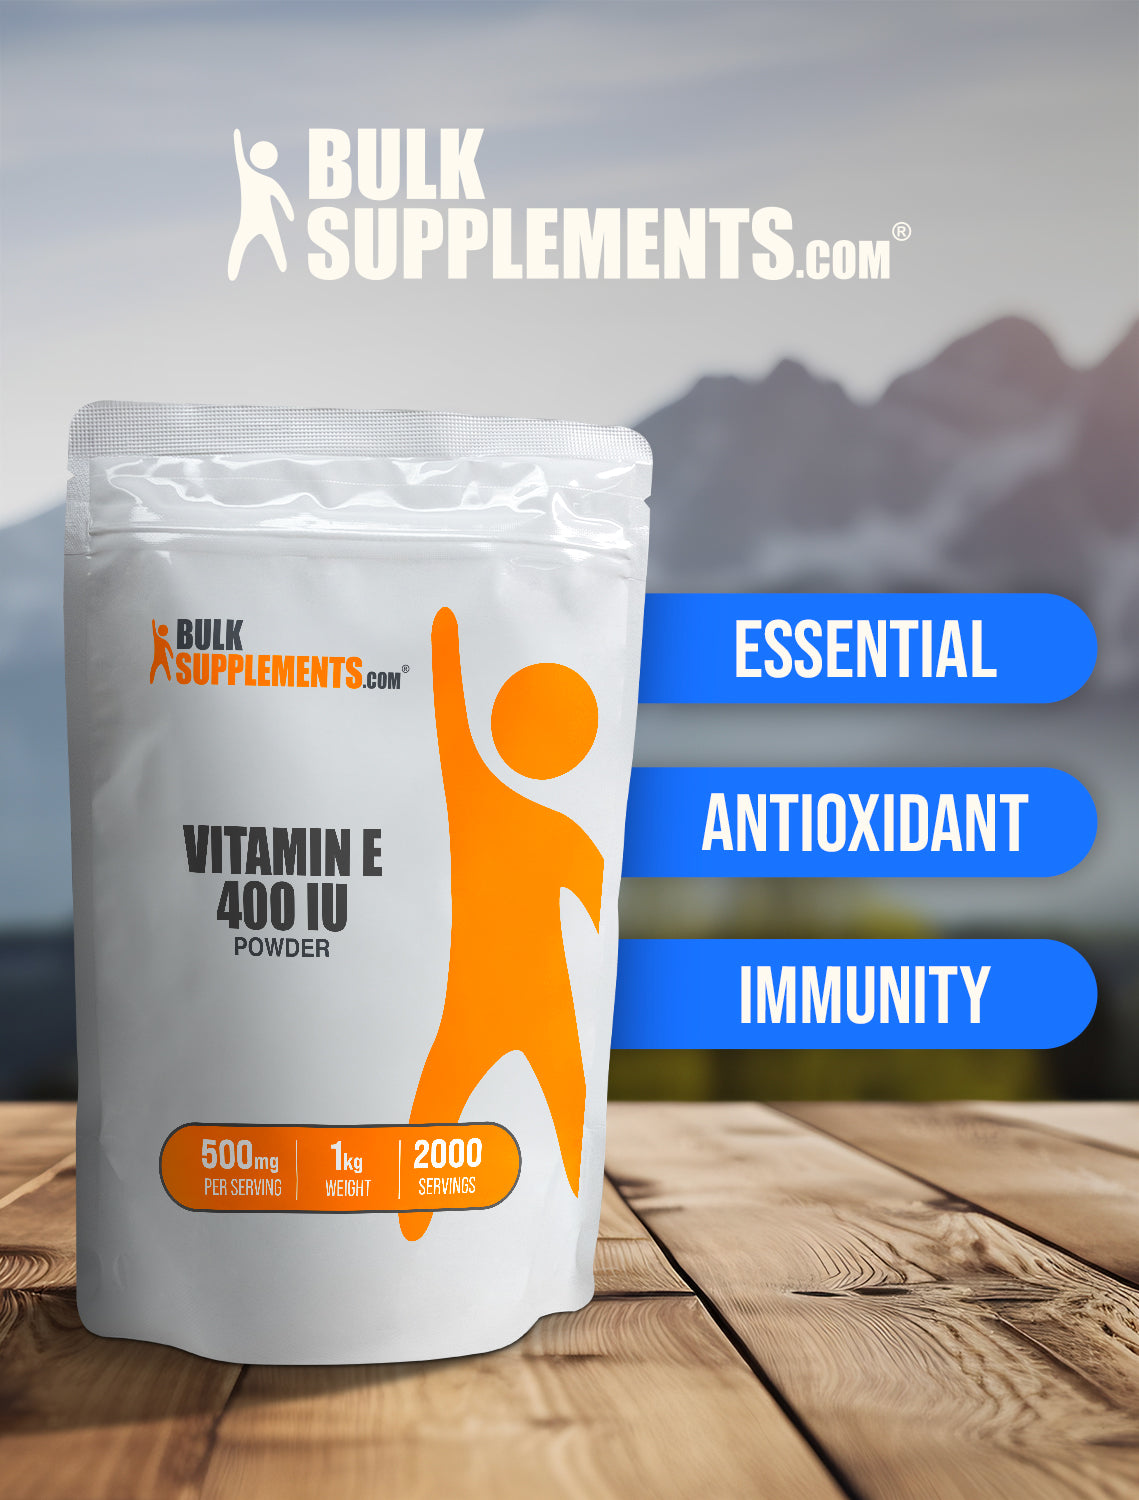 Vitamin E powder keyword image 1kg